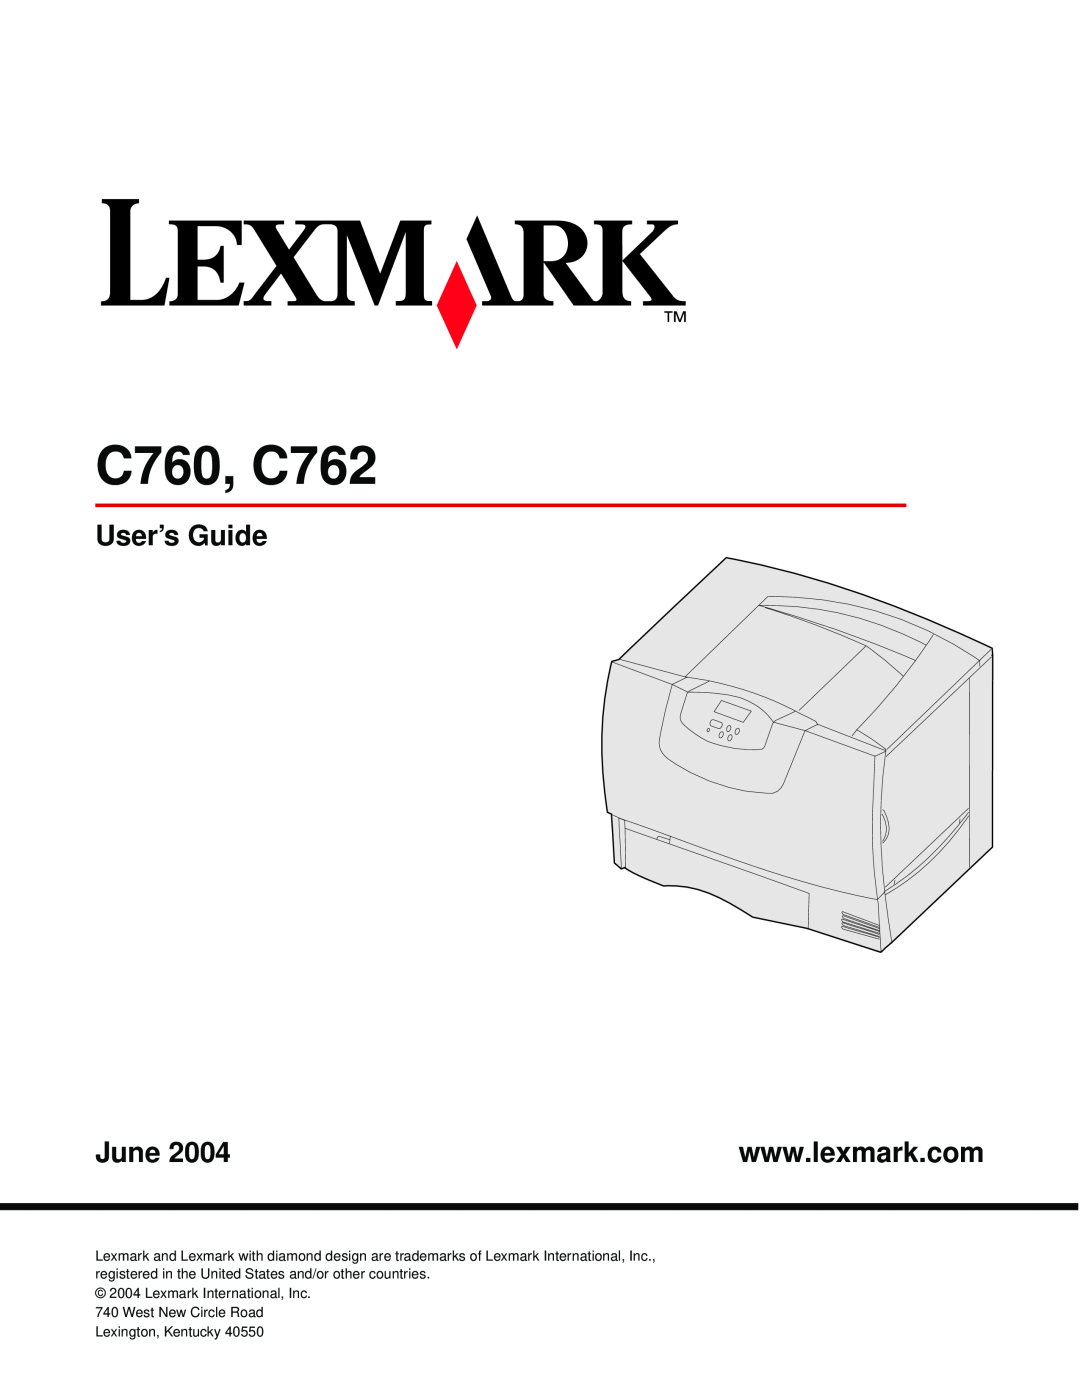 Lexmark manual C760, C762, User’s Guide, June, Lexmark International, Inc, West New Circle Road Lexington, Kentucky 